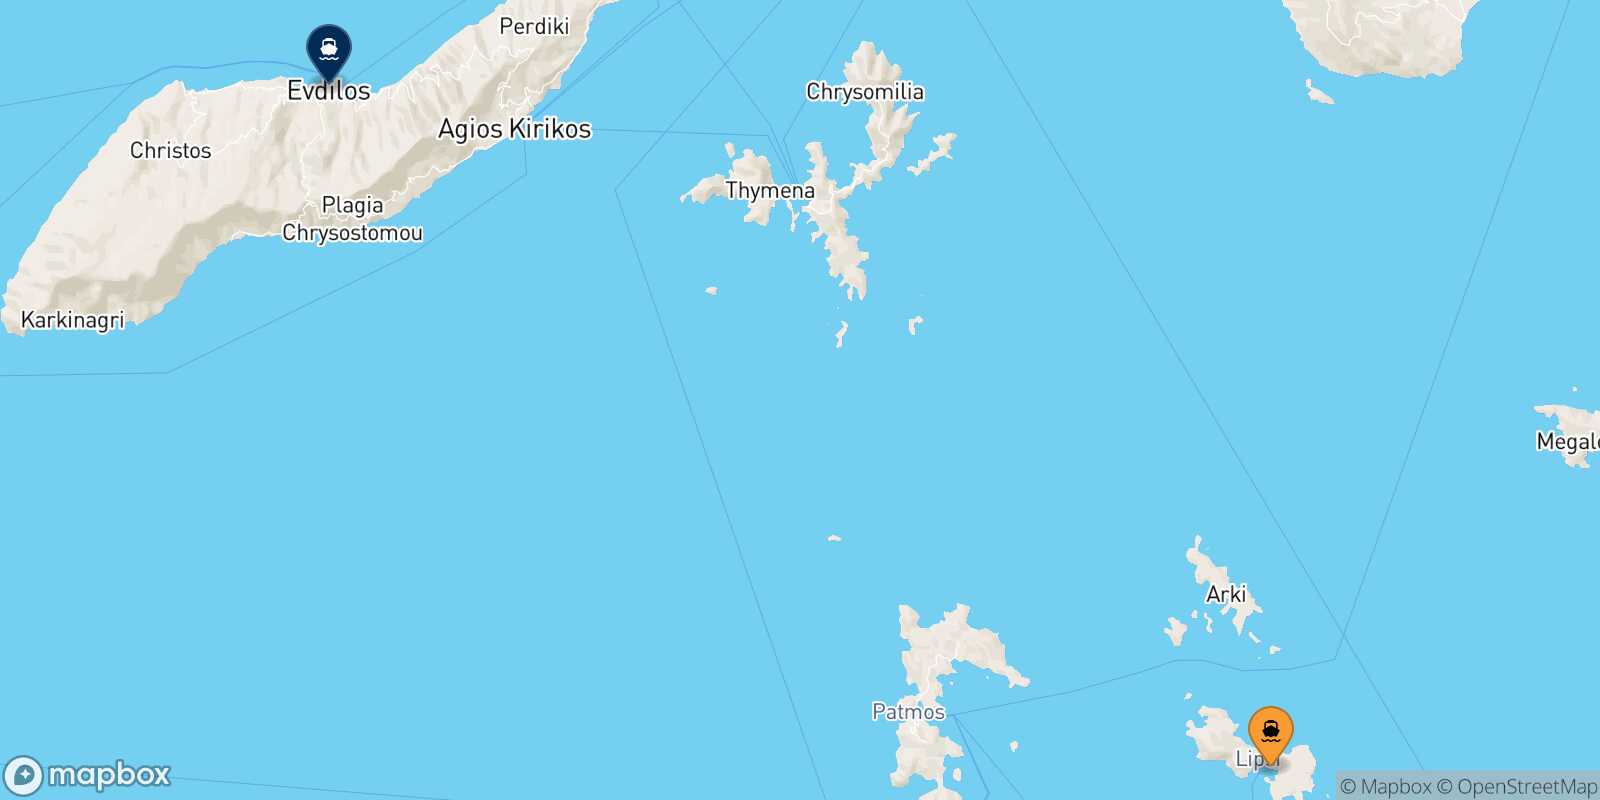 Lipsi Agios Kirikos (Ikaria) route map